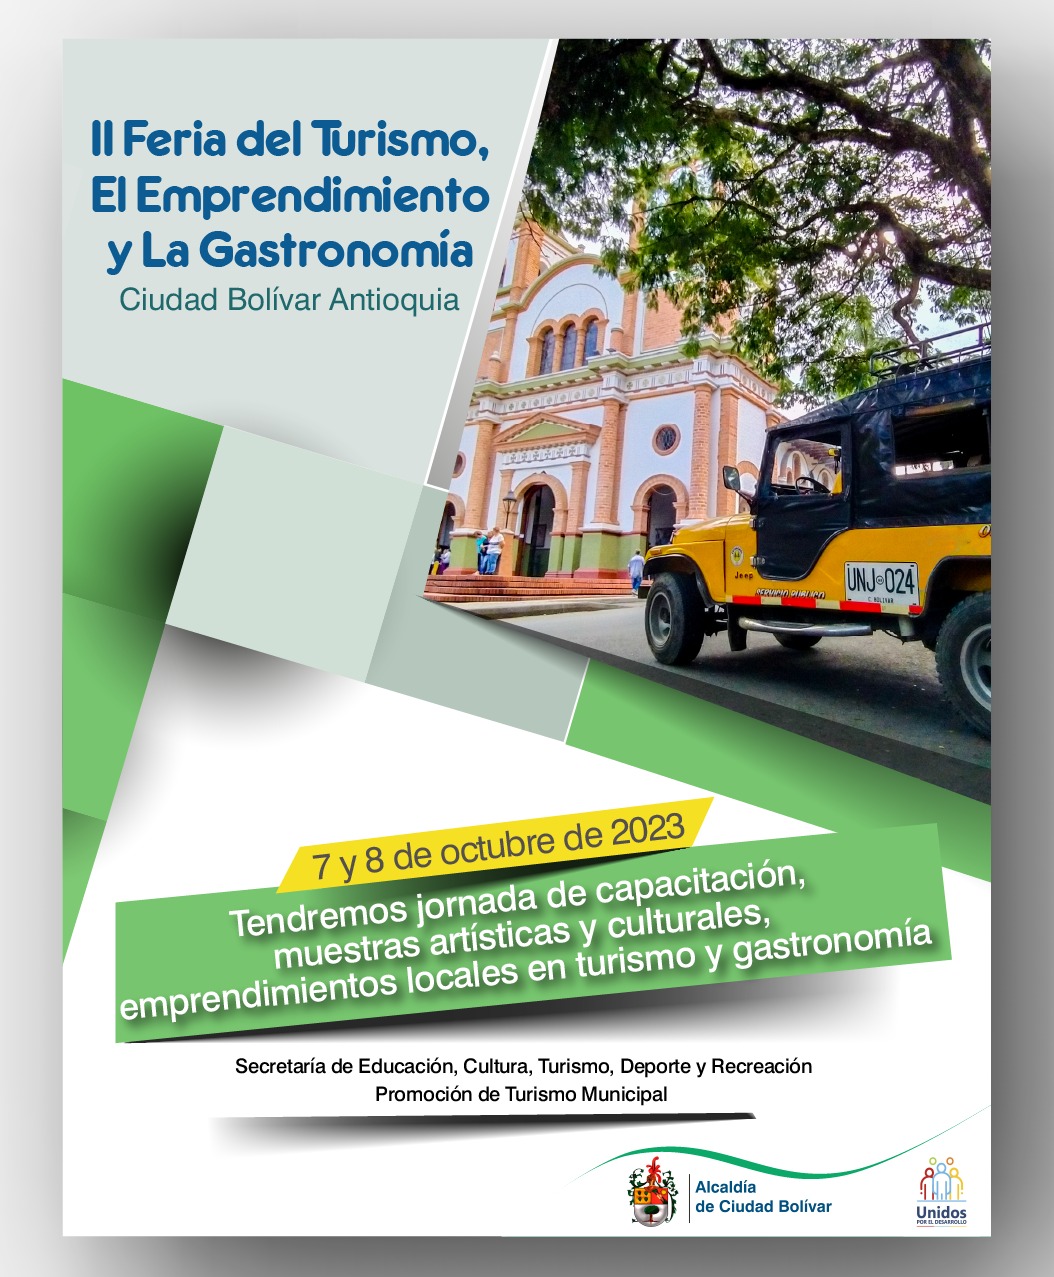 II Feria Turismo 2023 - Ciudad Bolívar